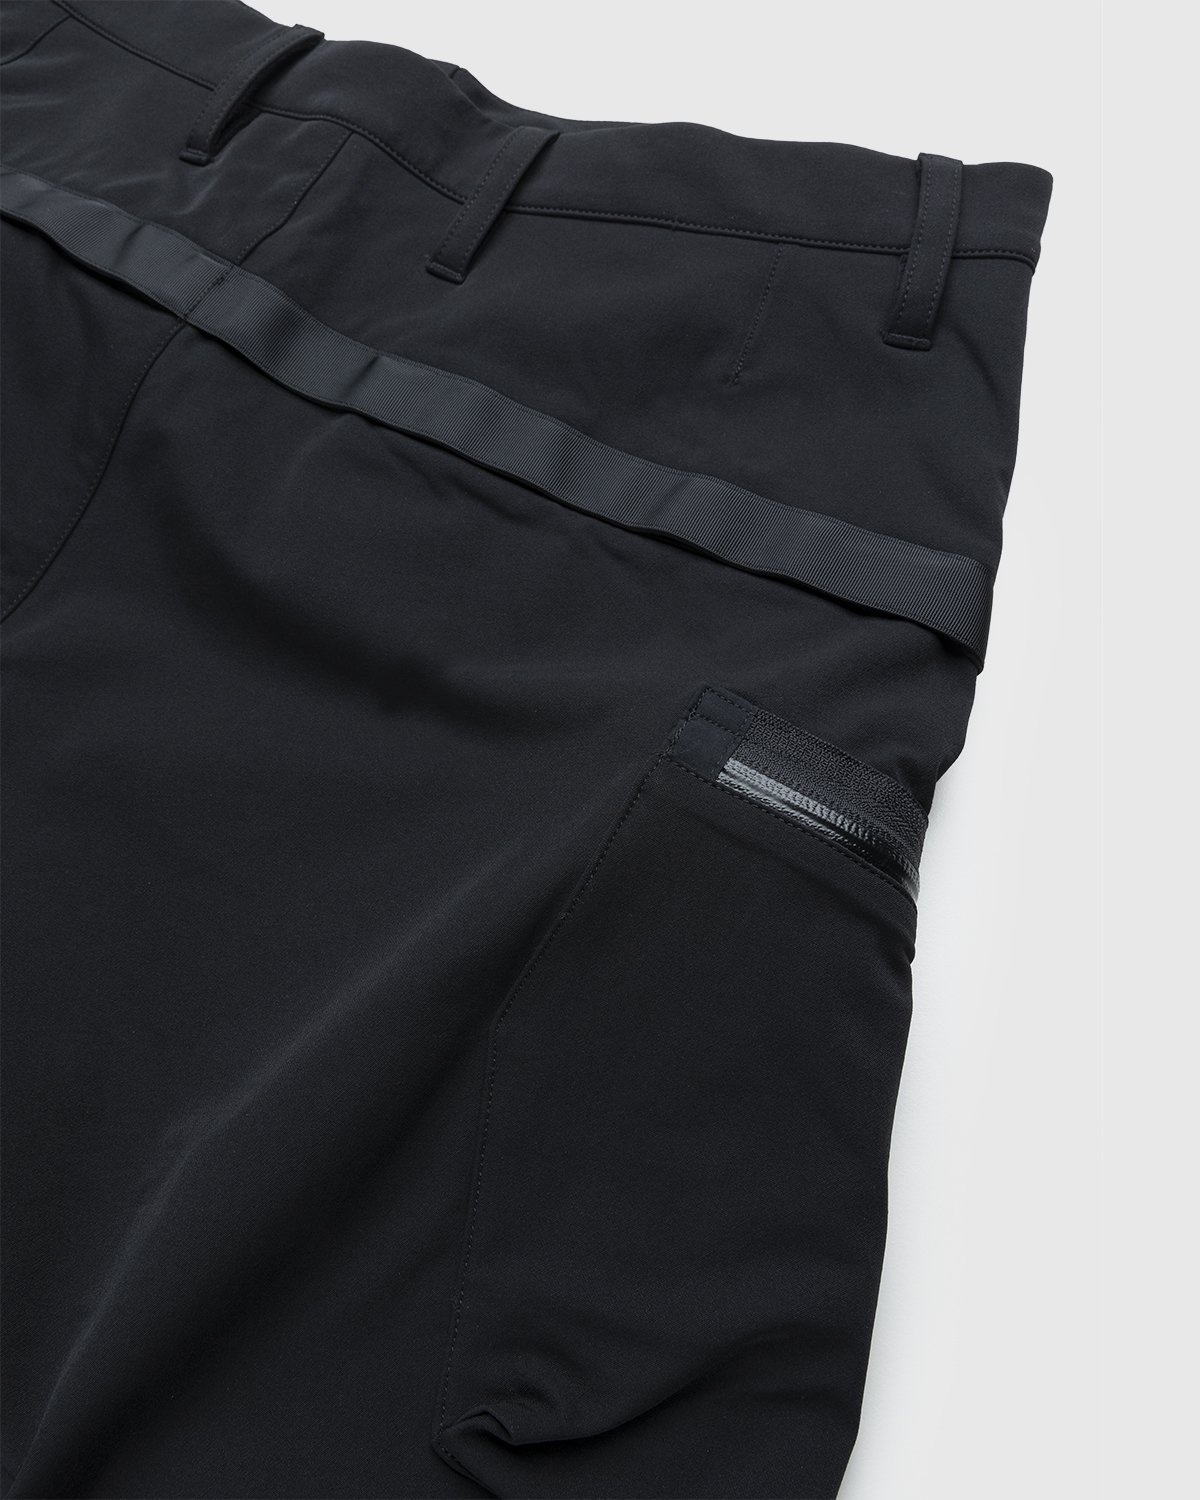 ACRONYM – P41-DS Pant Black | Highsnobiety Shop